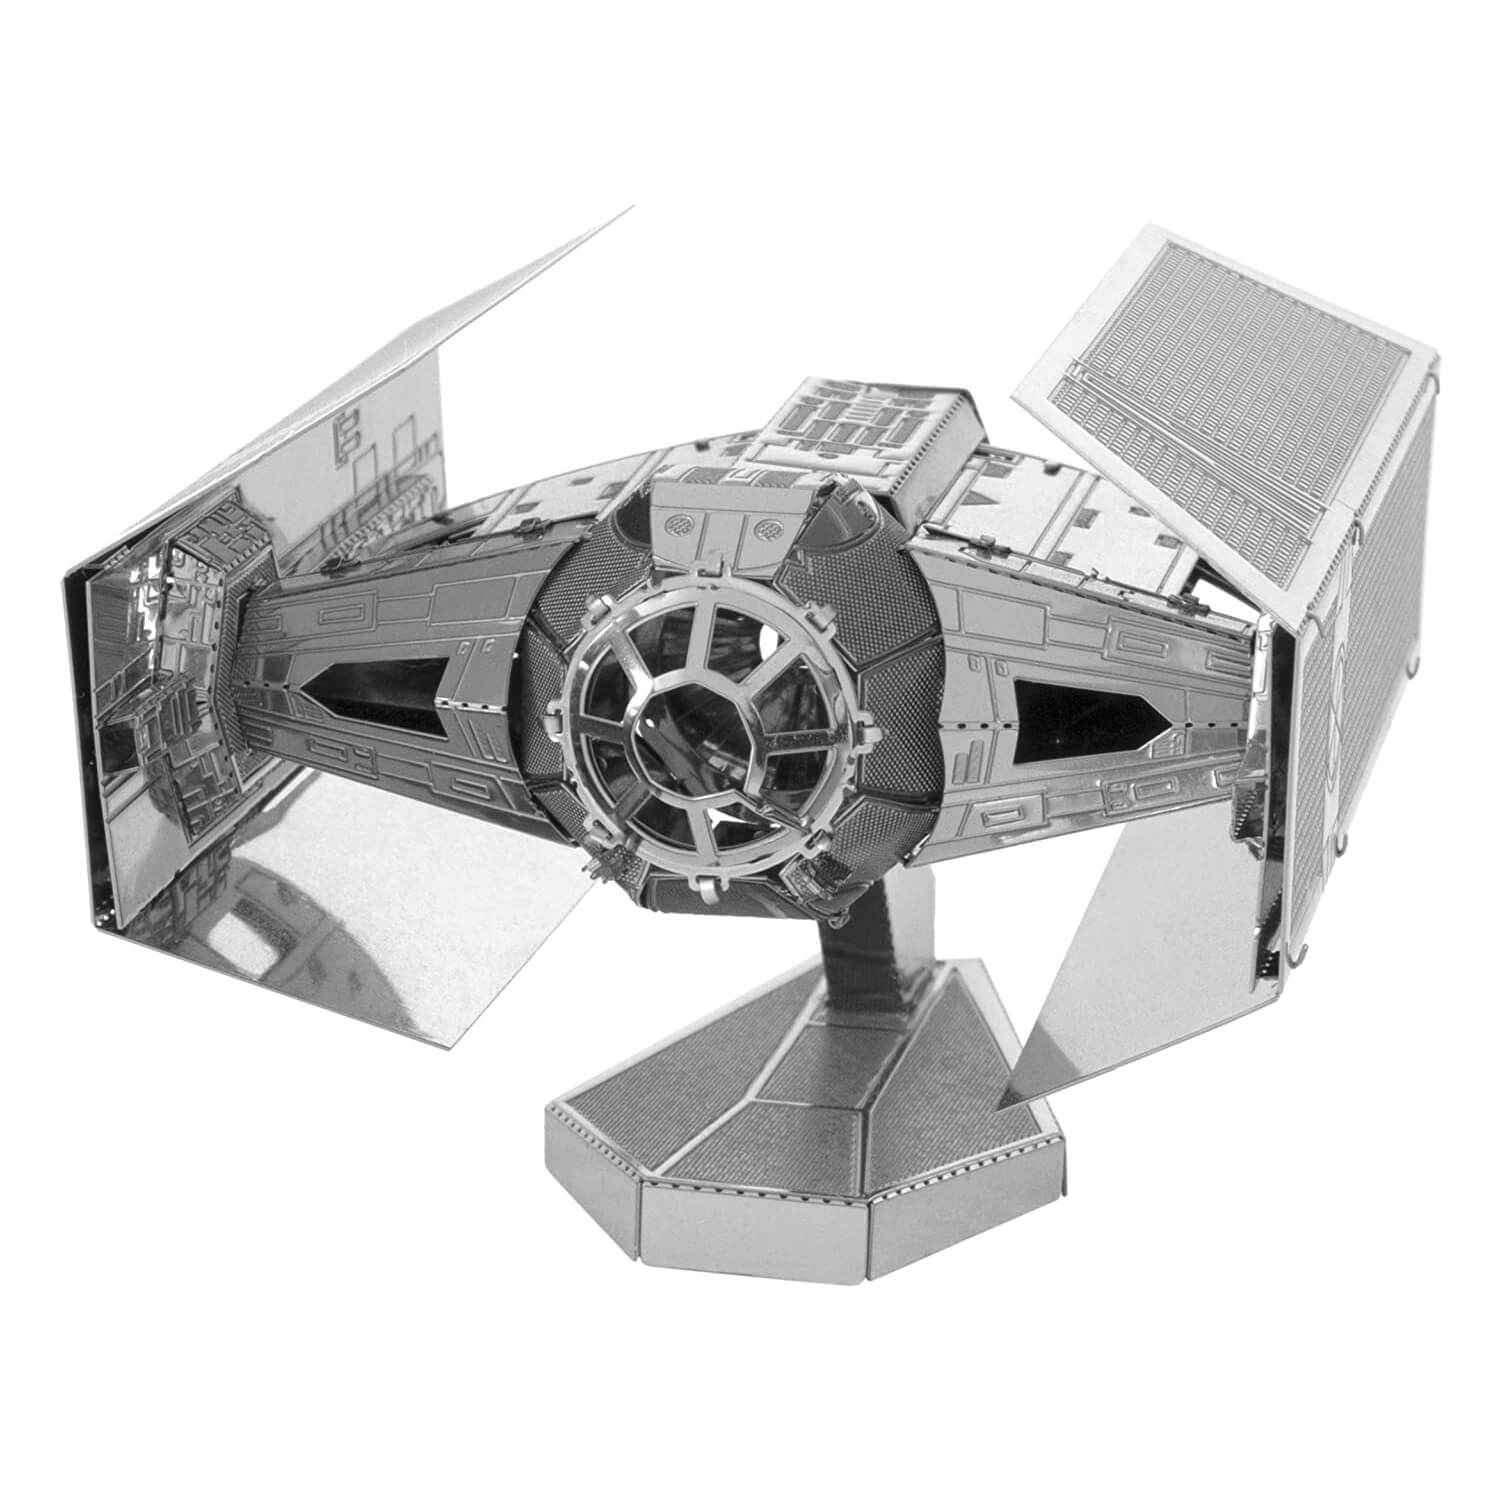 Metal Earth Star Wars Darth Vader's TIE Fighter Metal Model - 2 Sheets